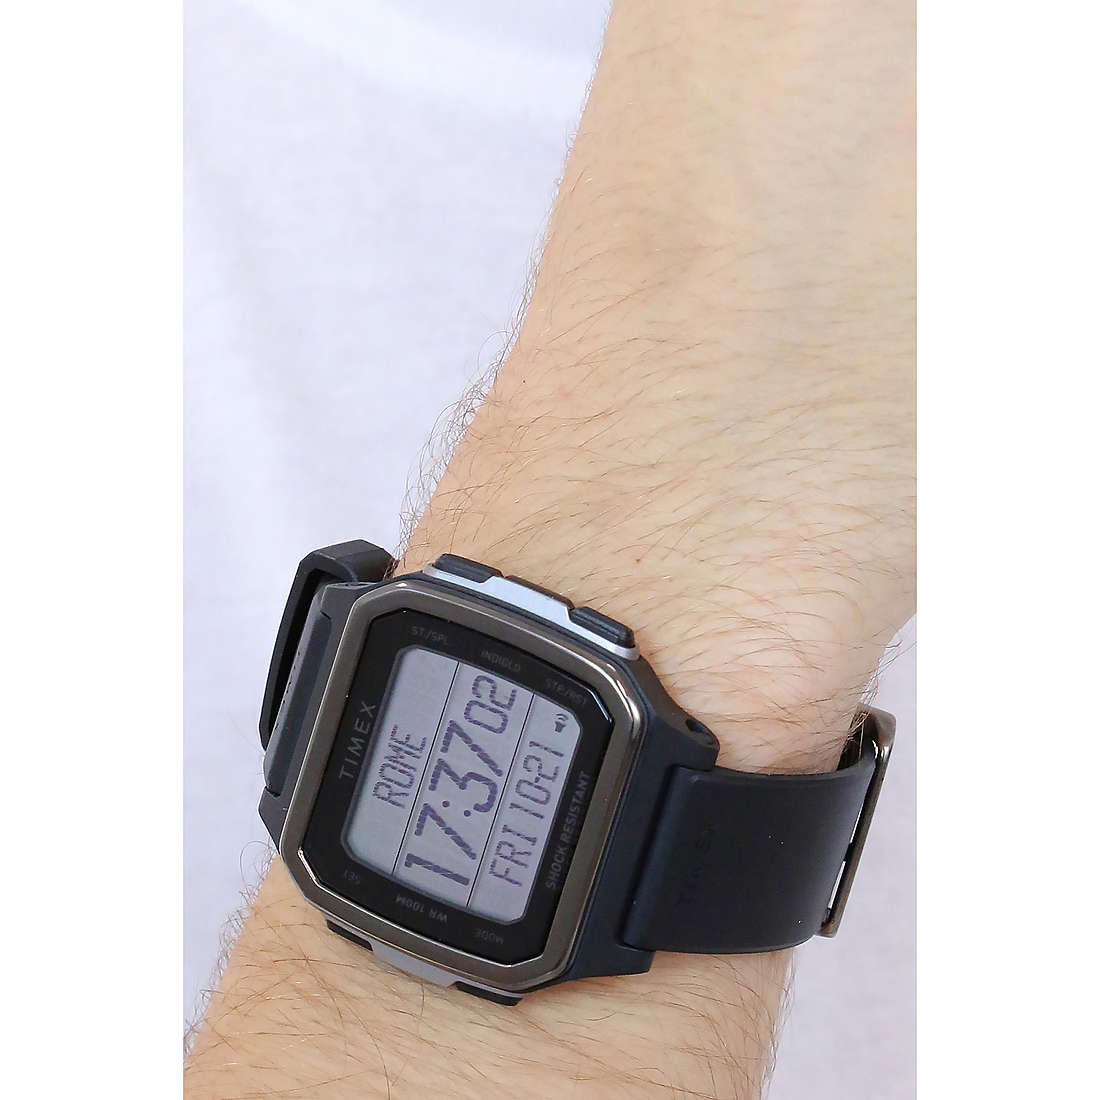 Timex digitali Shibuya uomo TW5M29000SU indosso